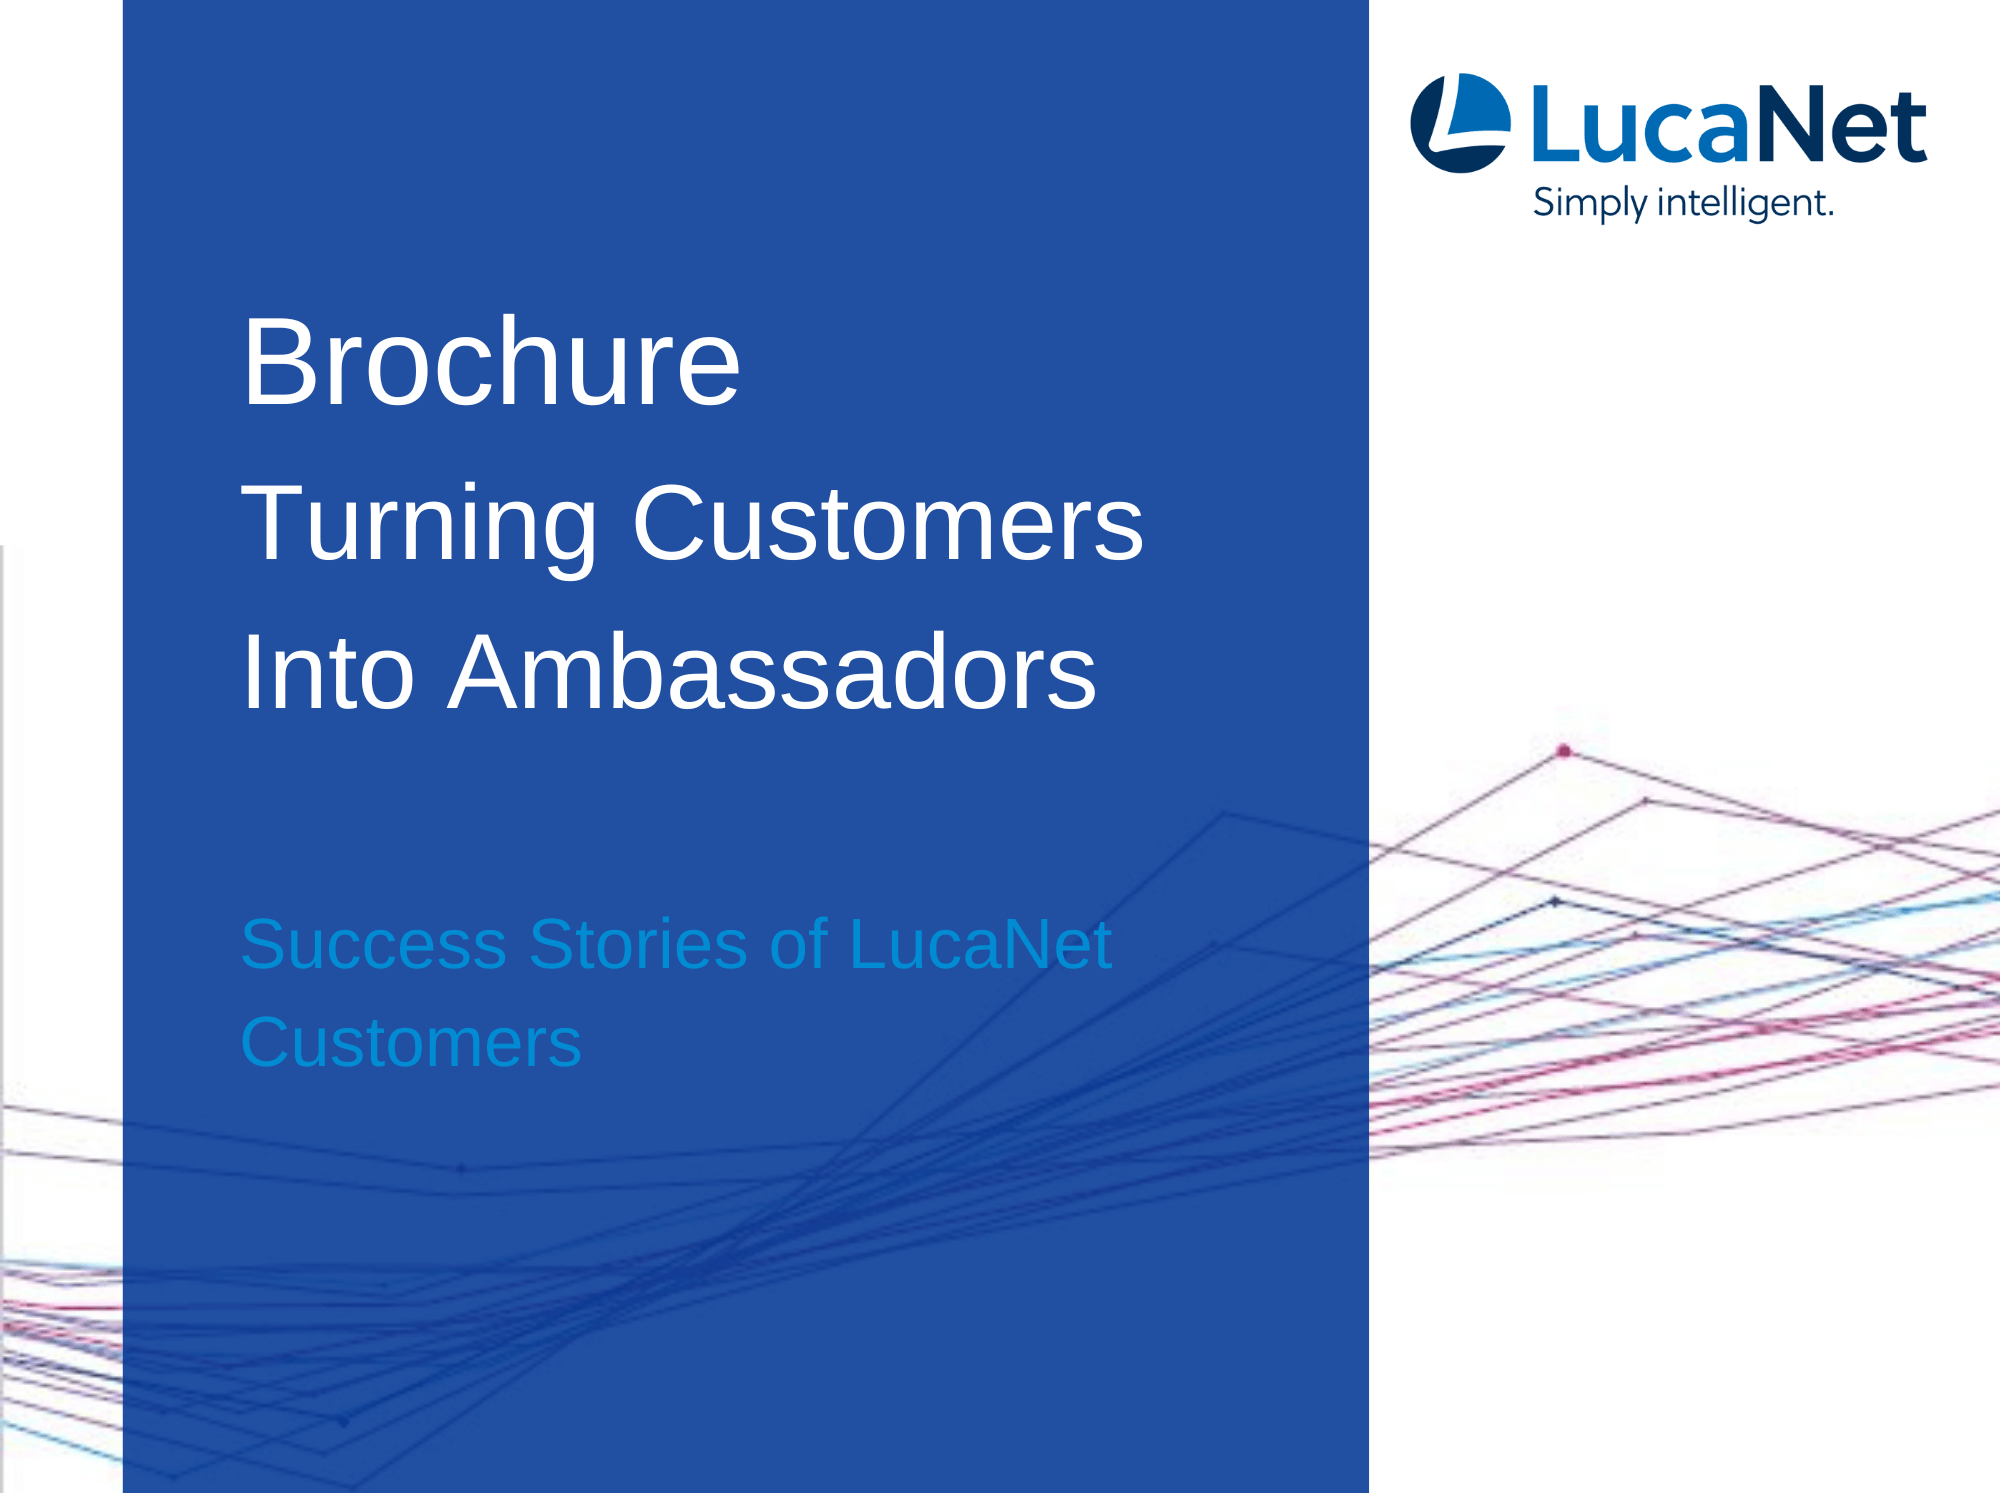 LucaNet Brochure: Turning Customers into Ambassadors